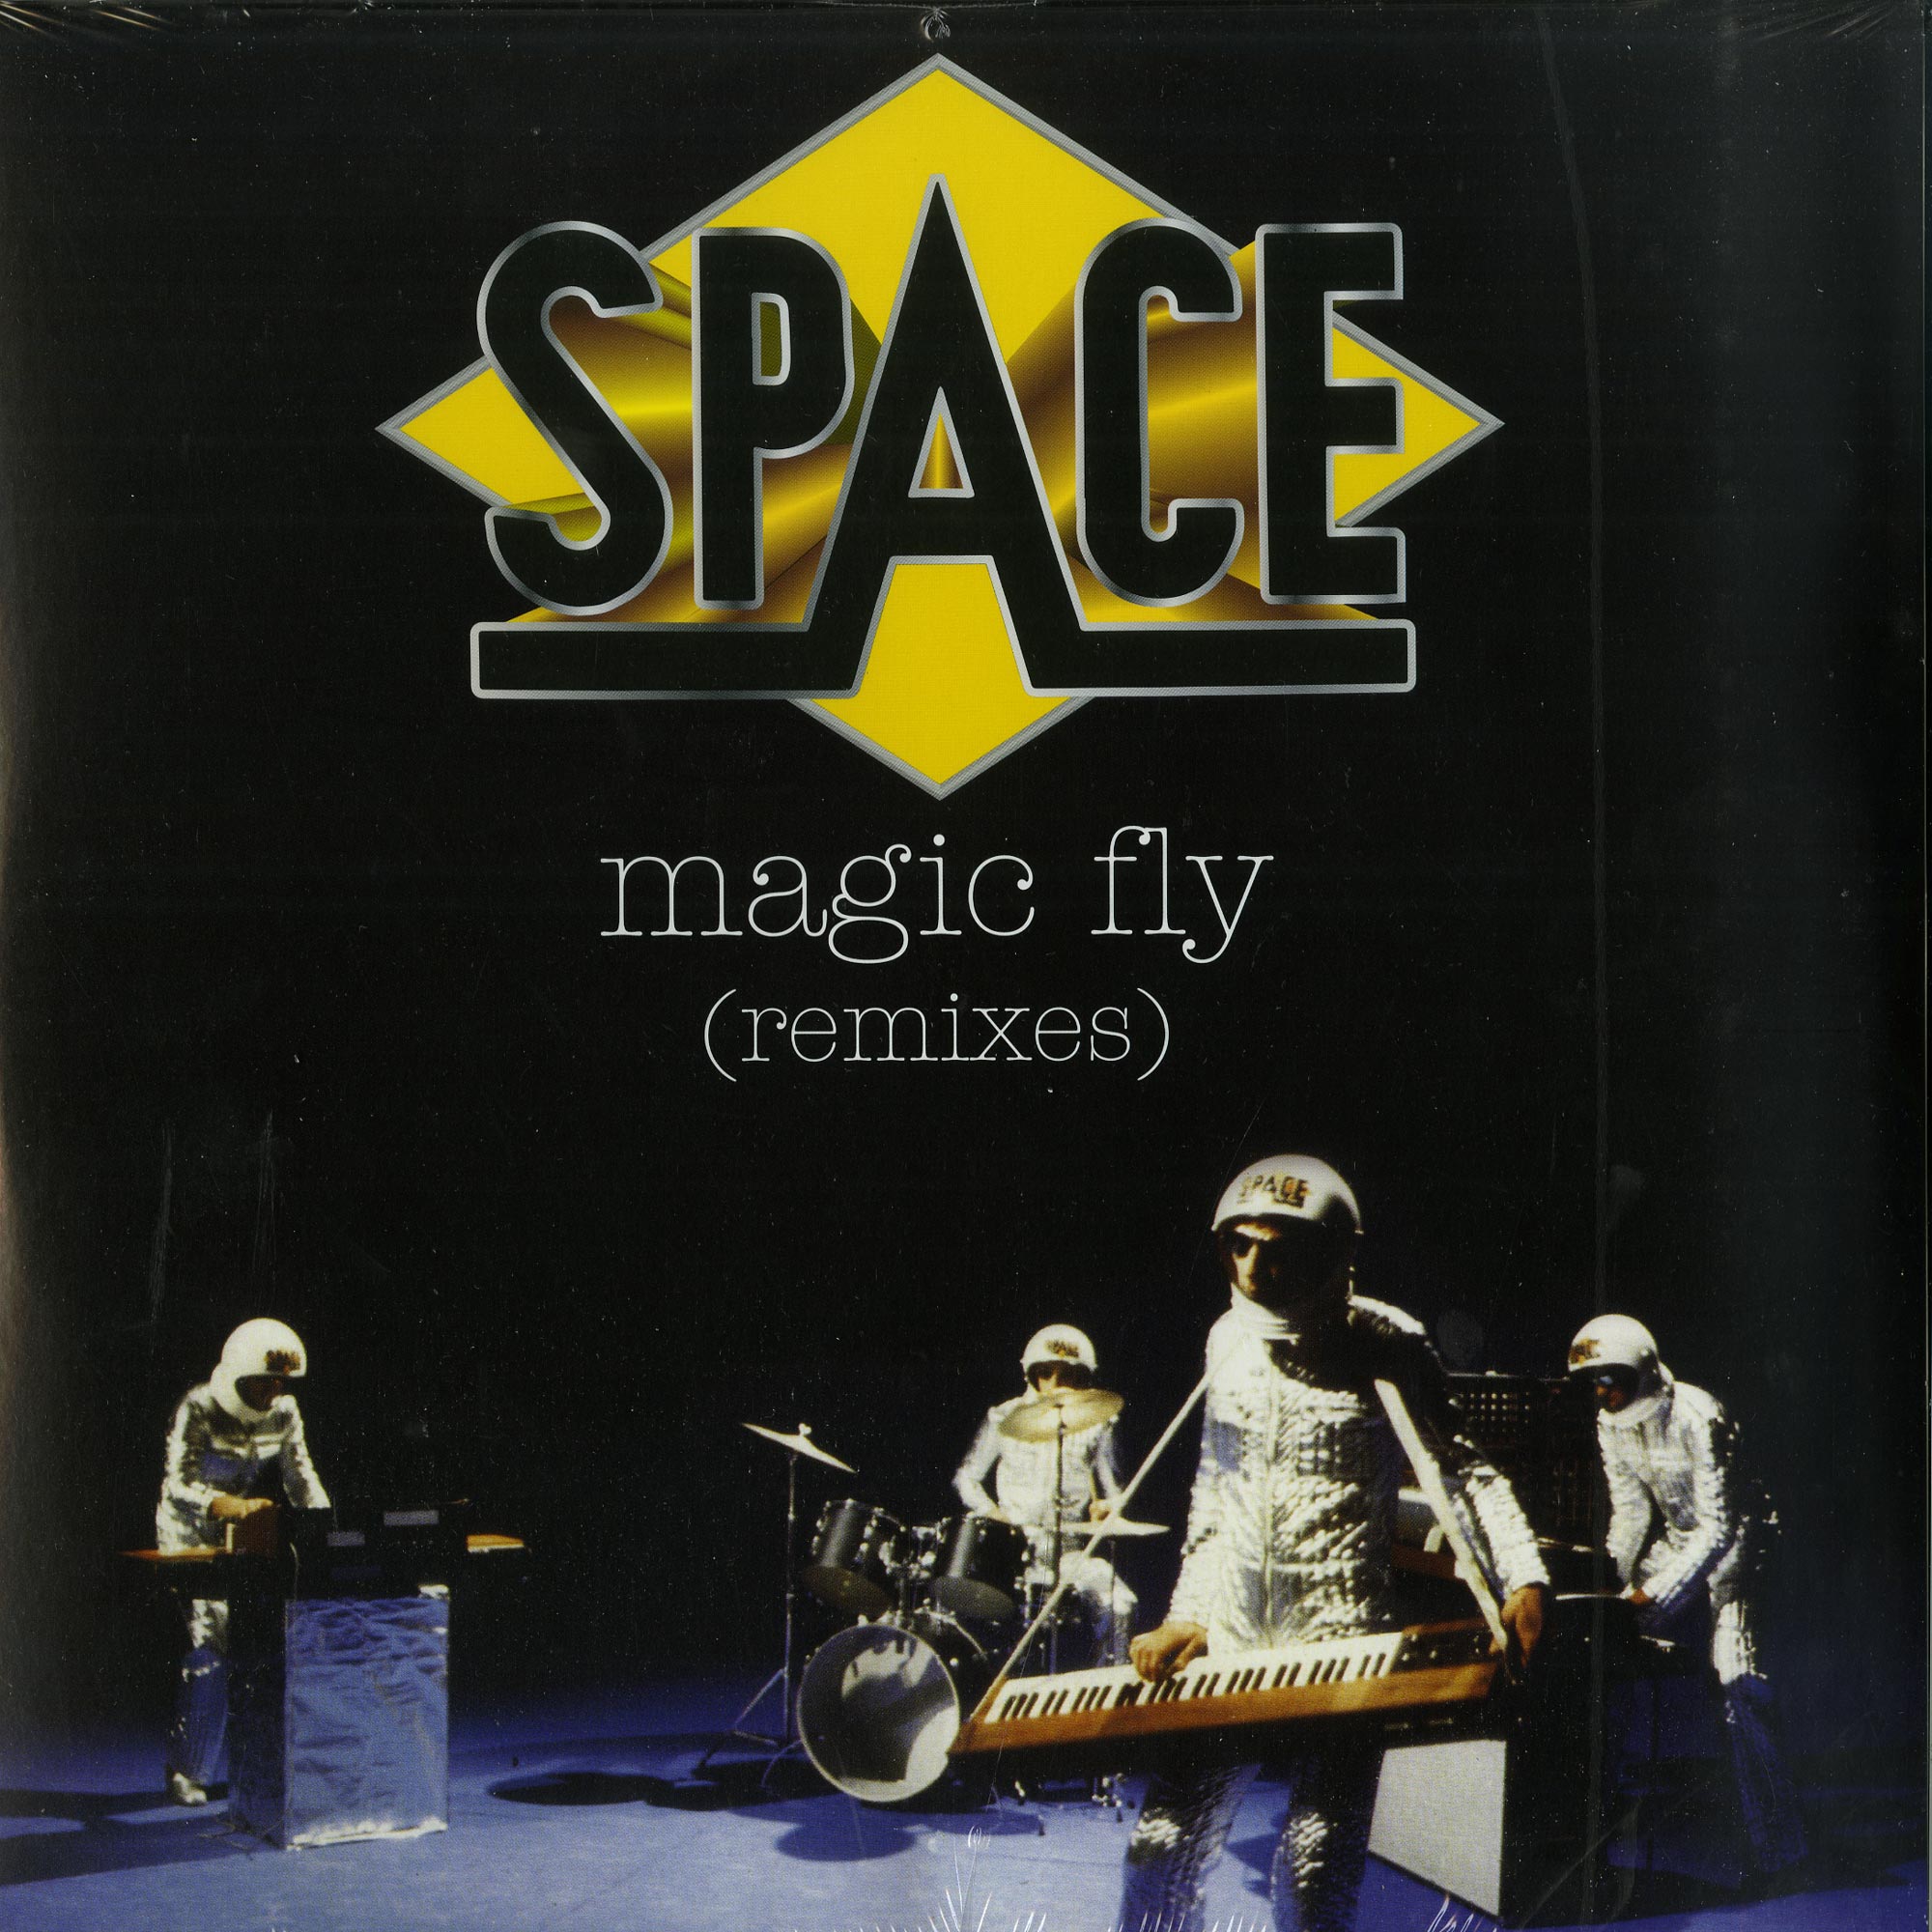 Fly ремикс. Space 1977 Magic Fly CD. Спейс группа 1977. Space "Magic Fly". Space обложки альбомов.